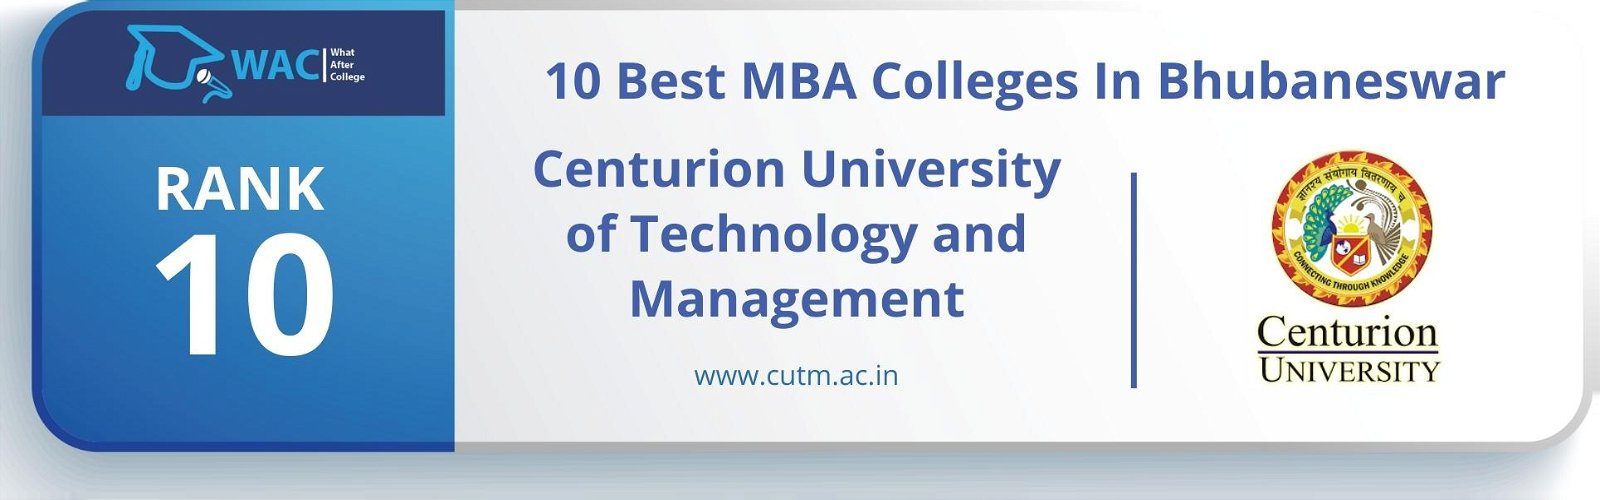 Centurion University of Technology and Management